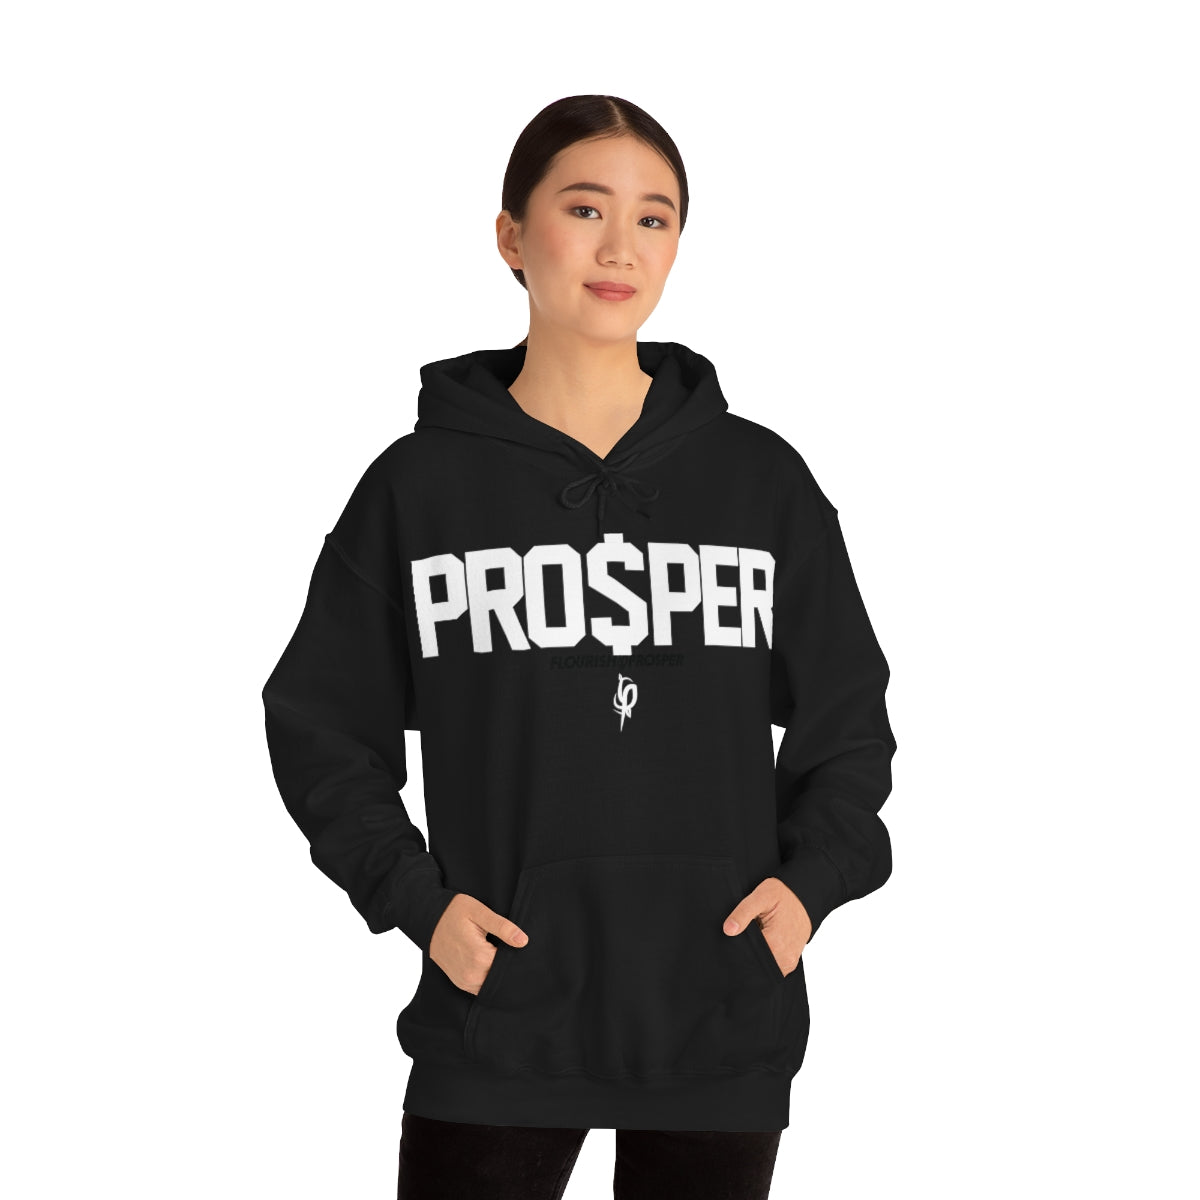 Promo PRO$PER Black Hoodie by Flourish$Prosper (White Lettering)